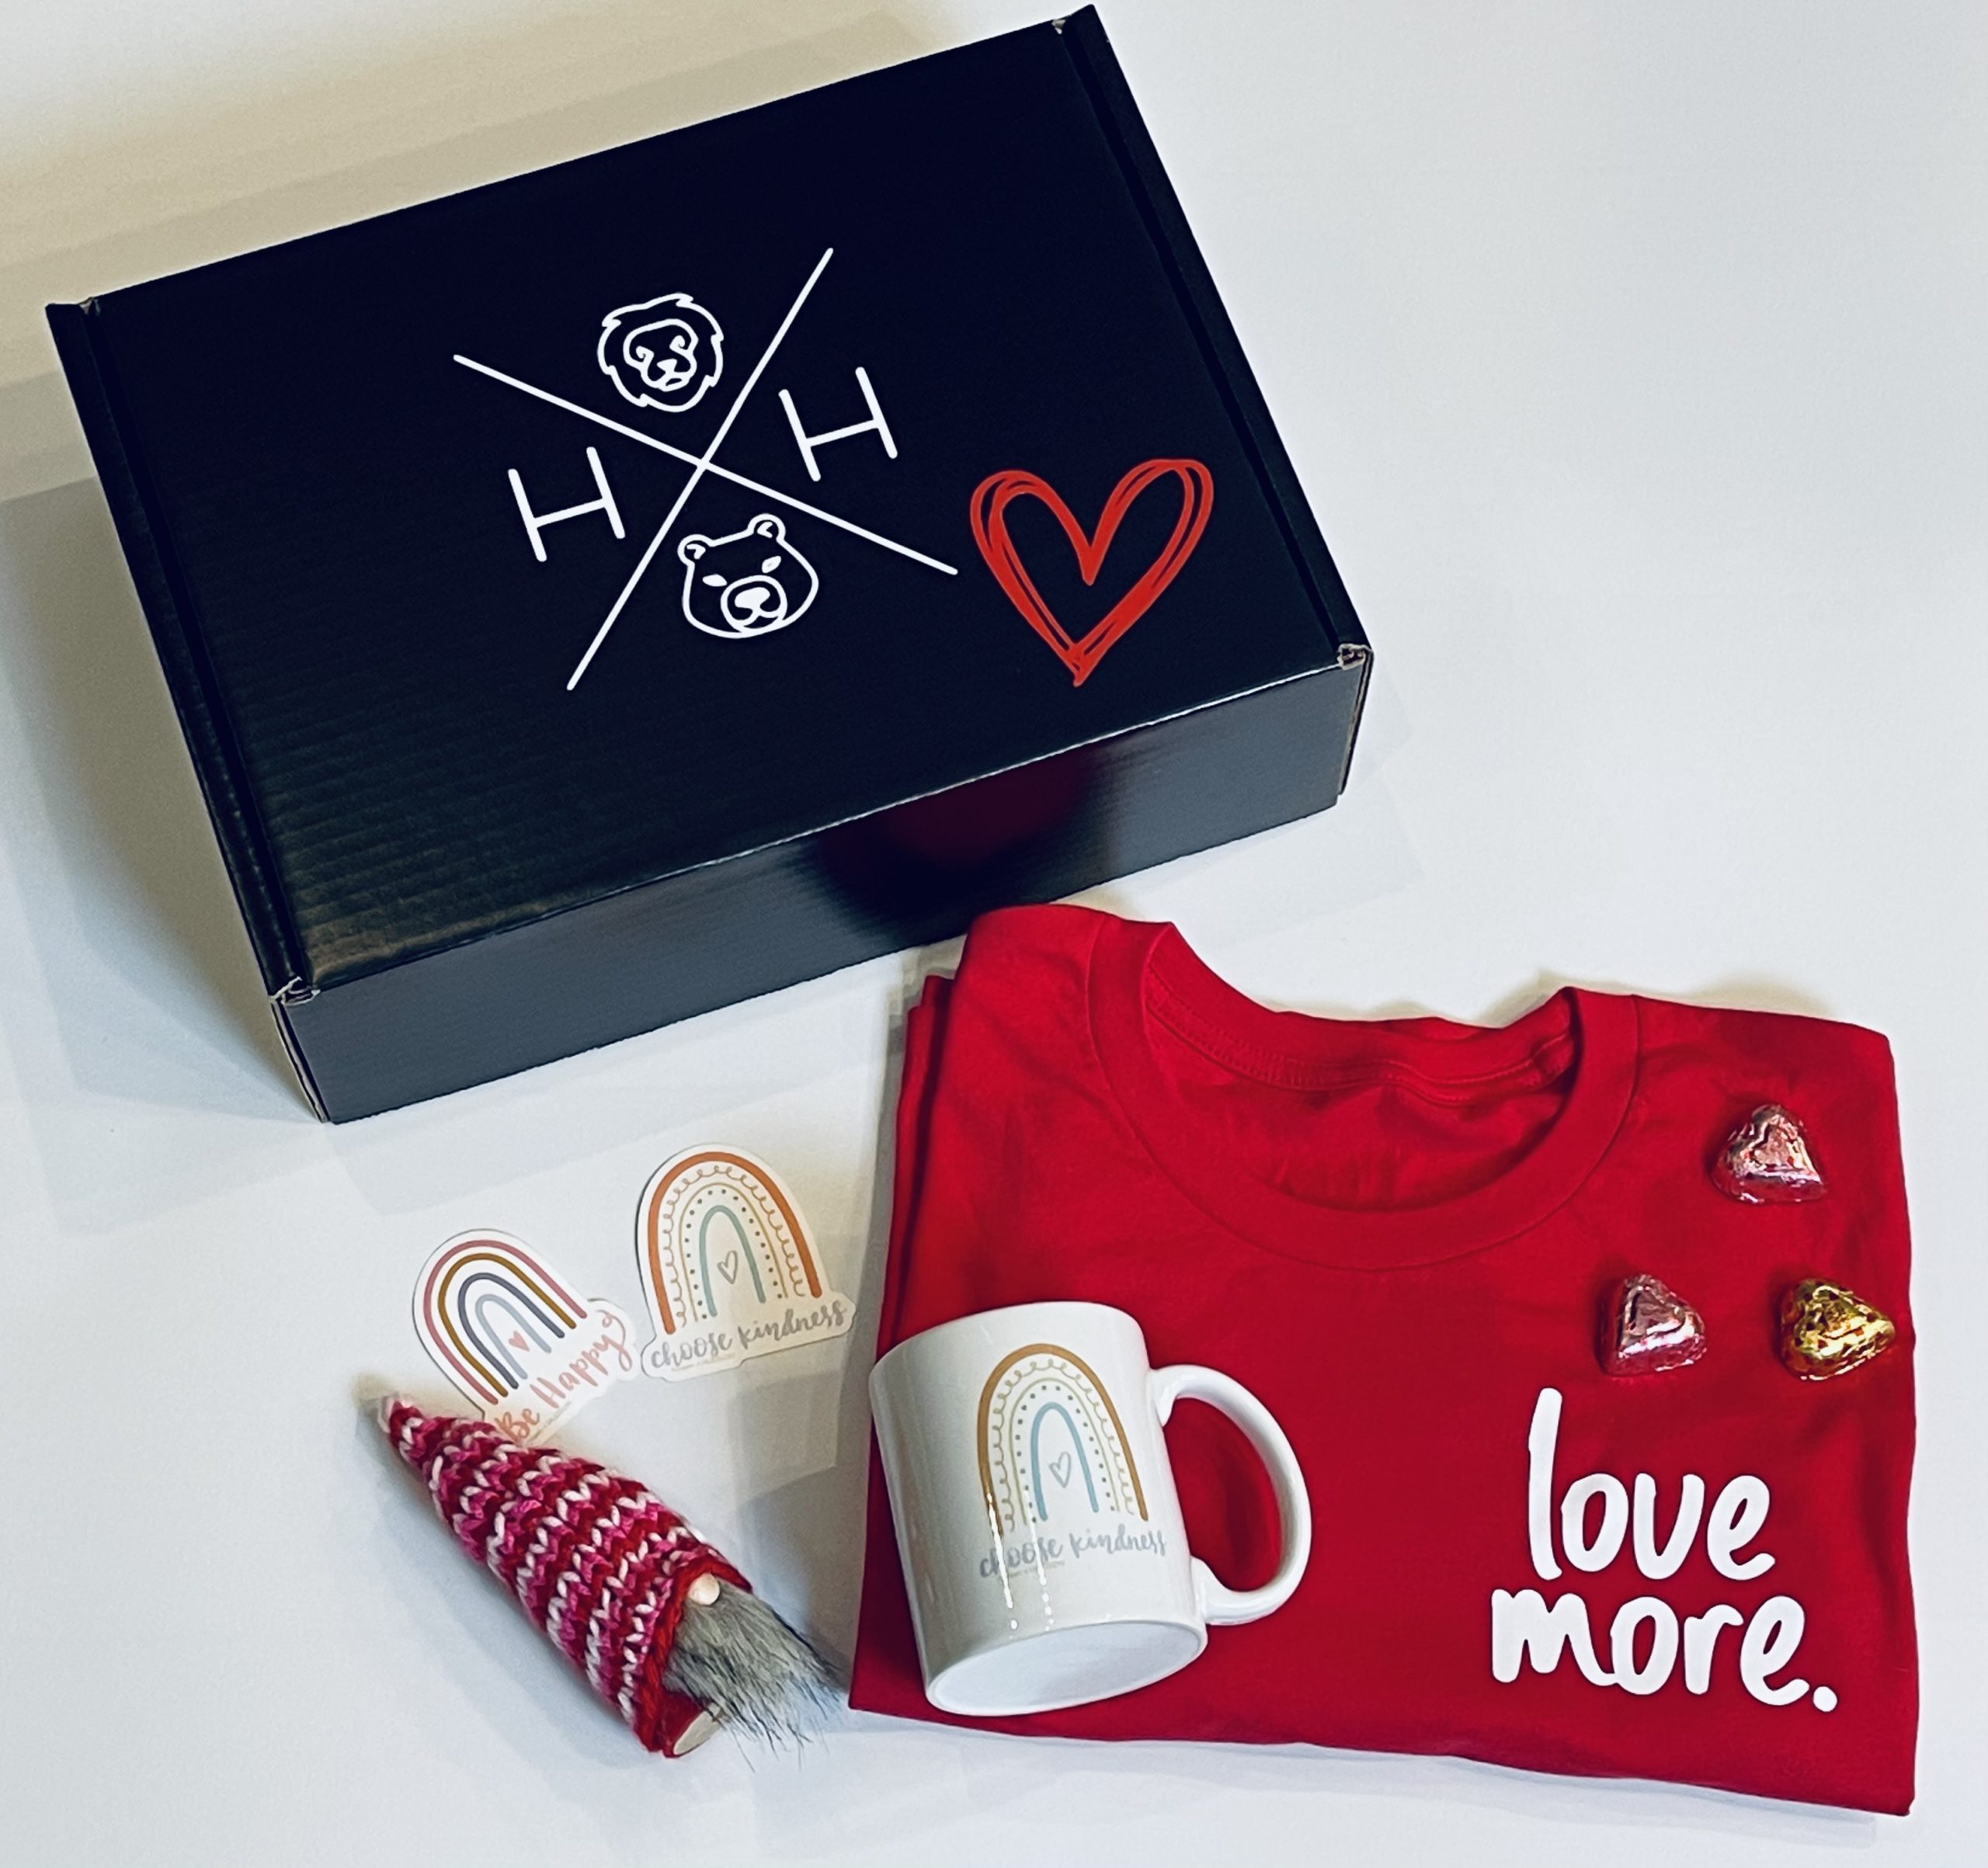 Love moe gift box